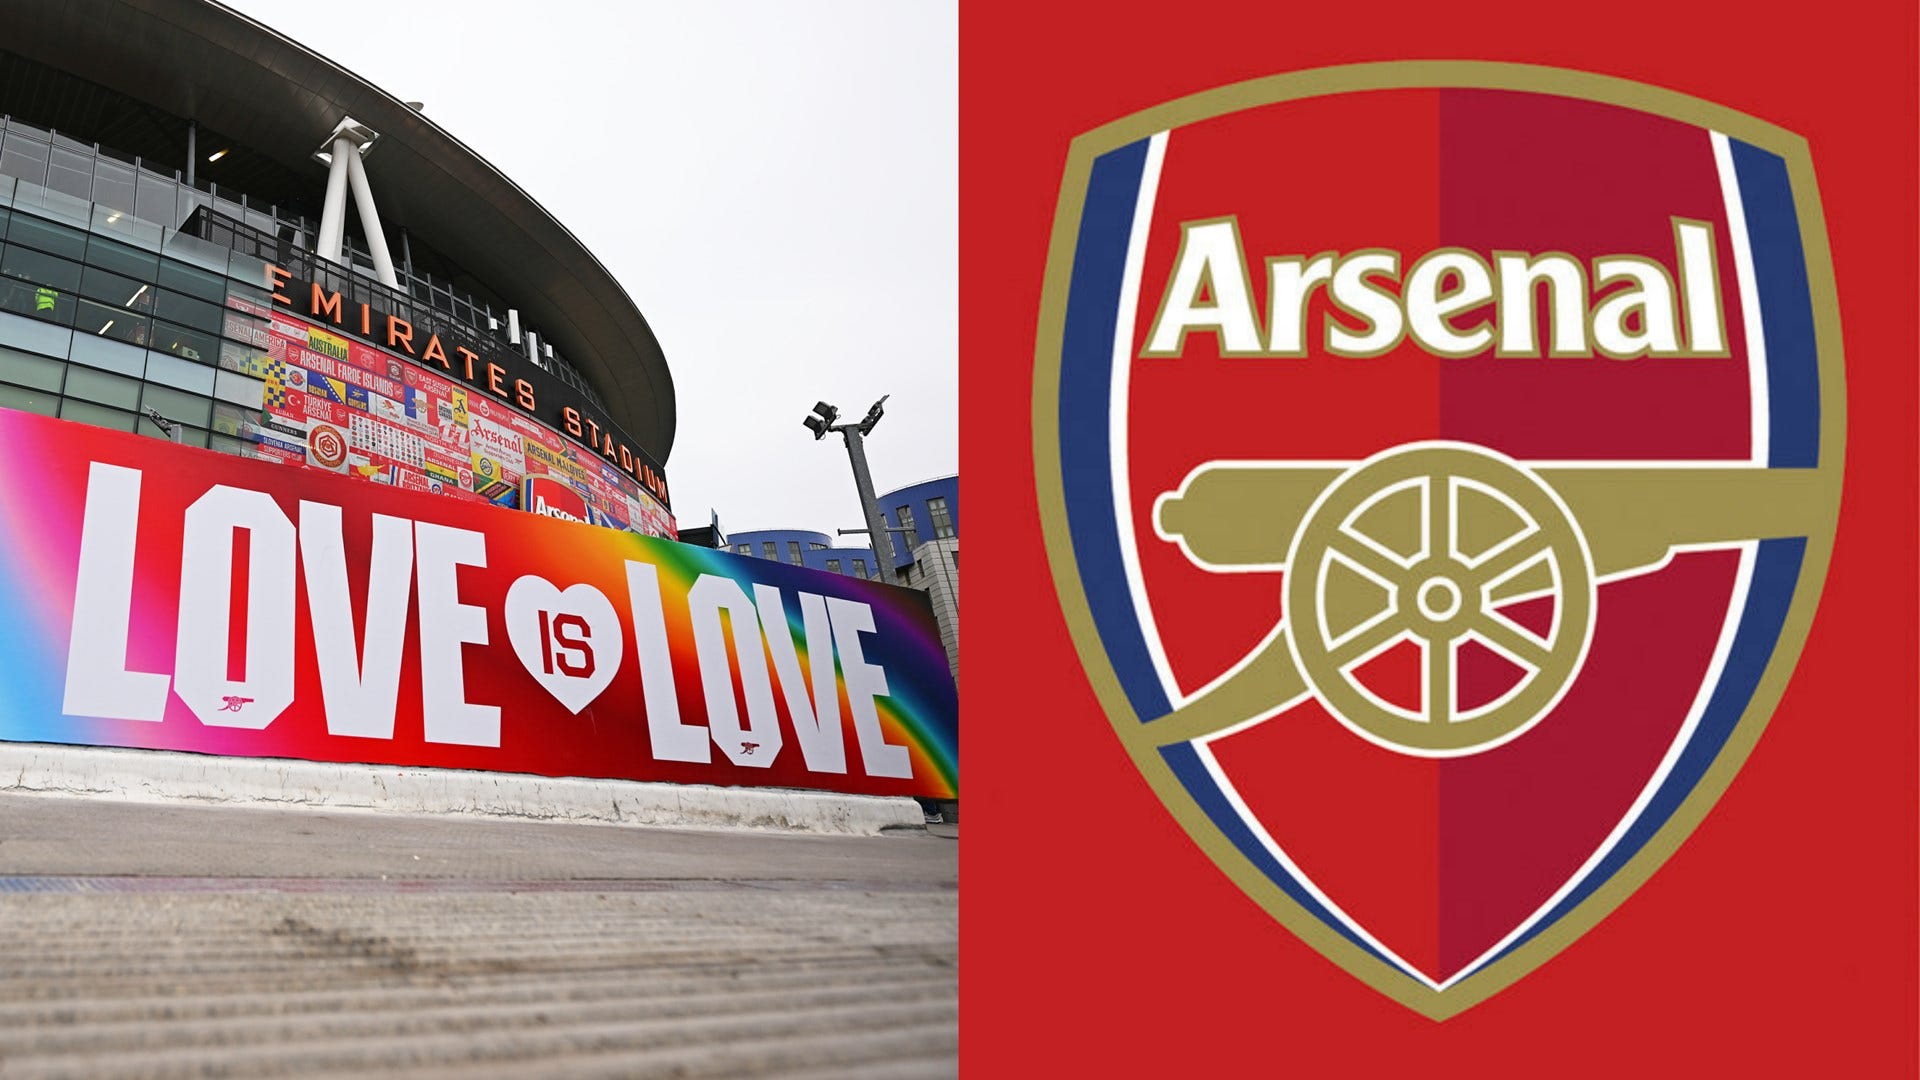 Love is love banner at Arsenal's Emirates Stadium